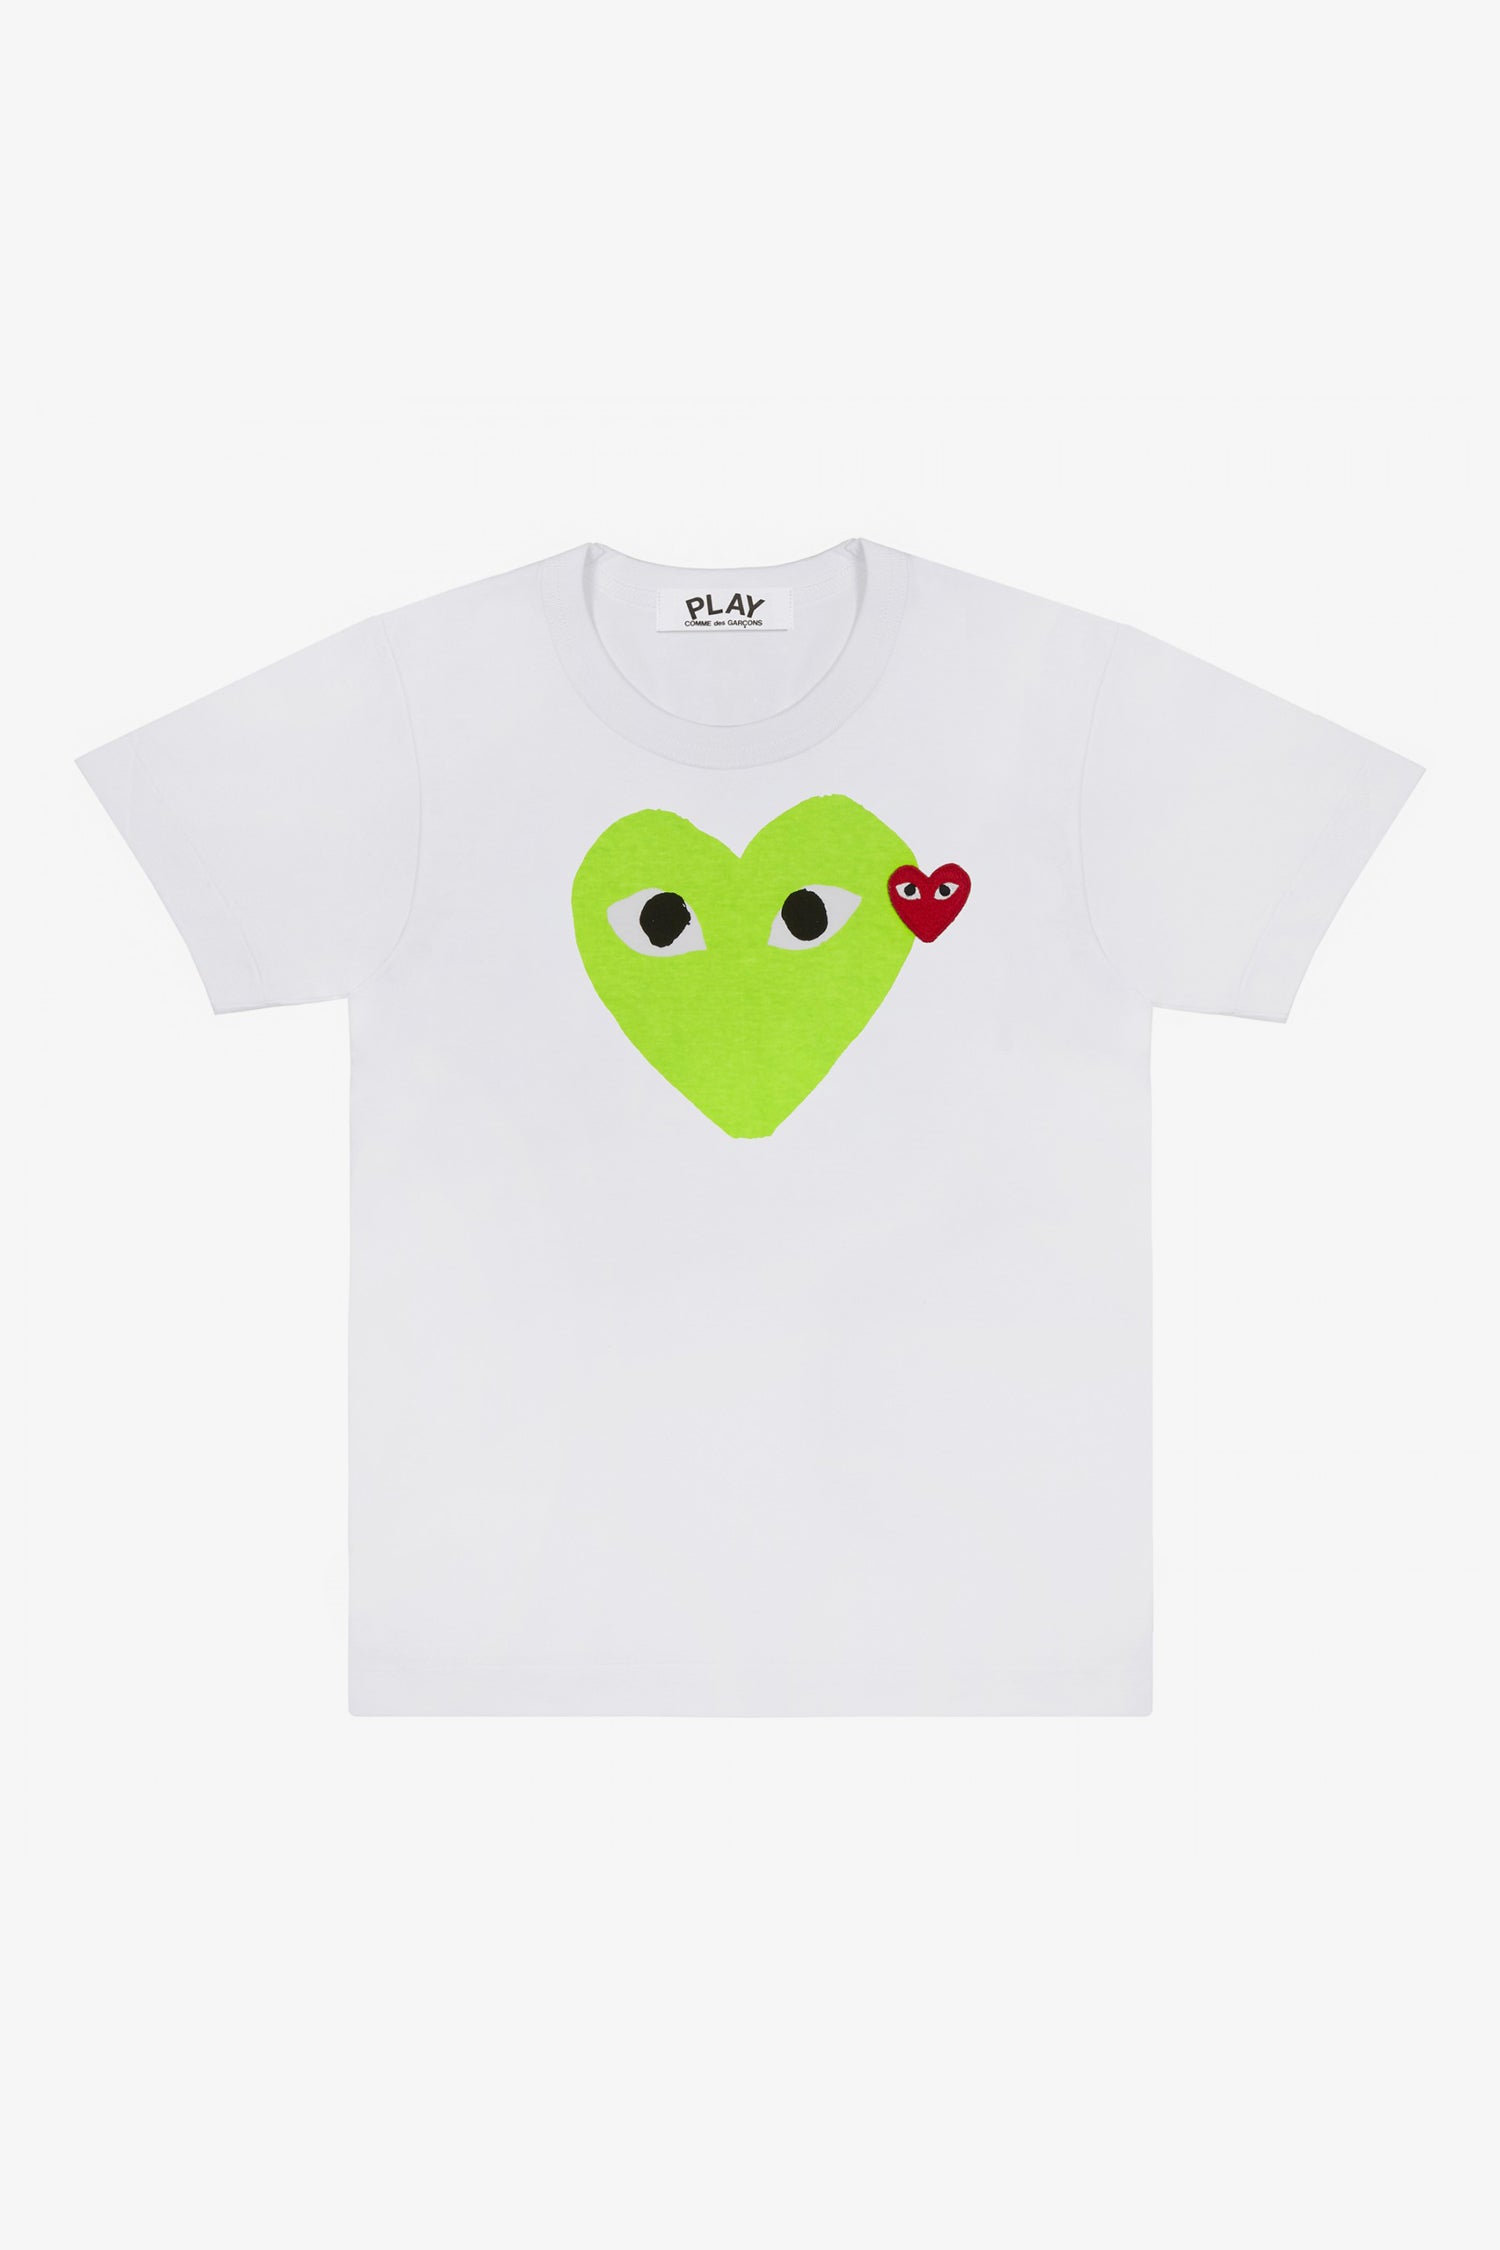 Selectshop FRAME - COMME DES GARCONS PLAY Big Lime Green Heart T-Shirt T-Shirt Dubai